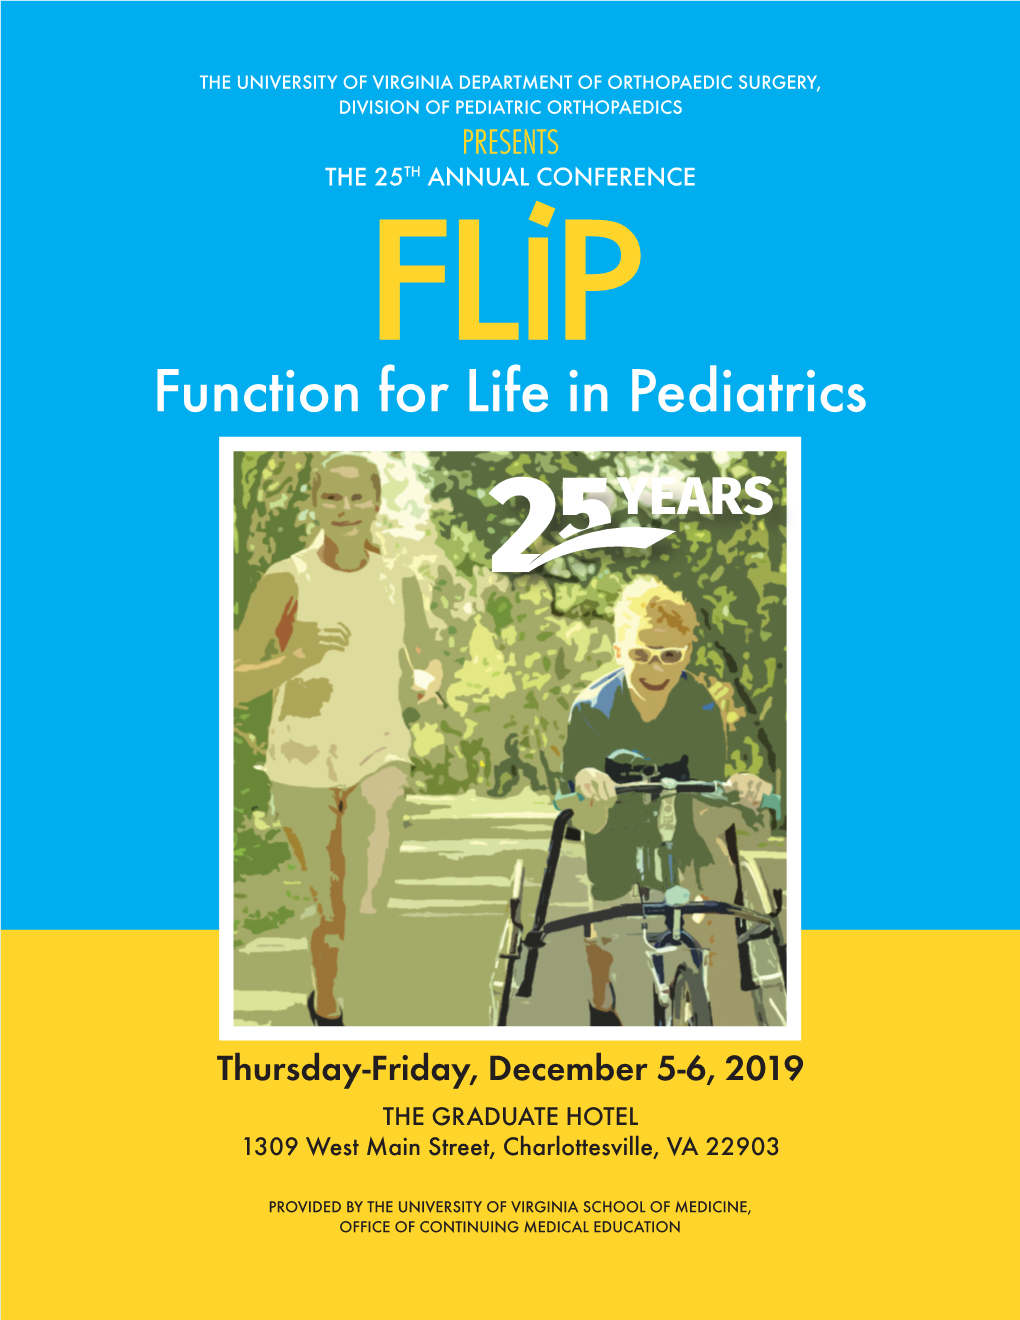 Function for Life in Pediatrics